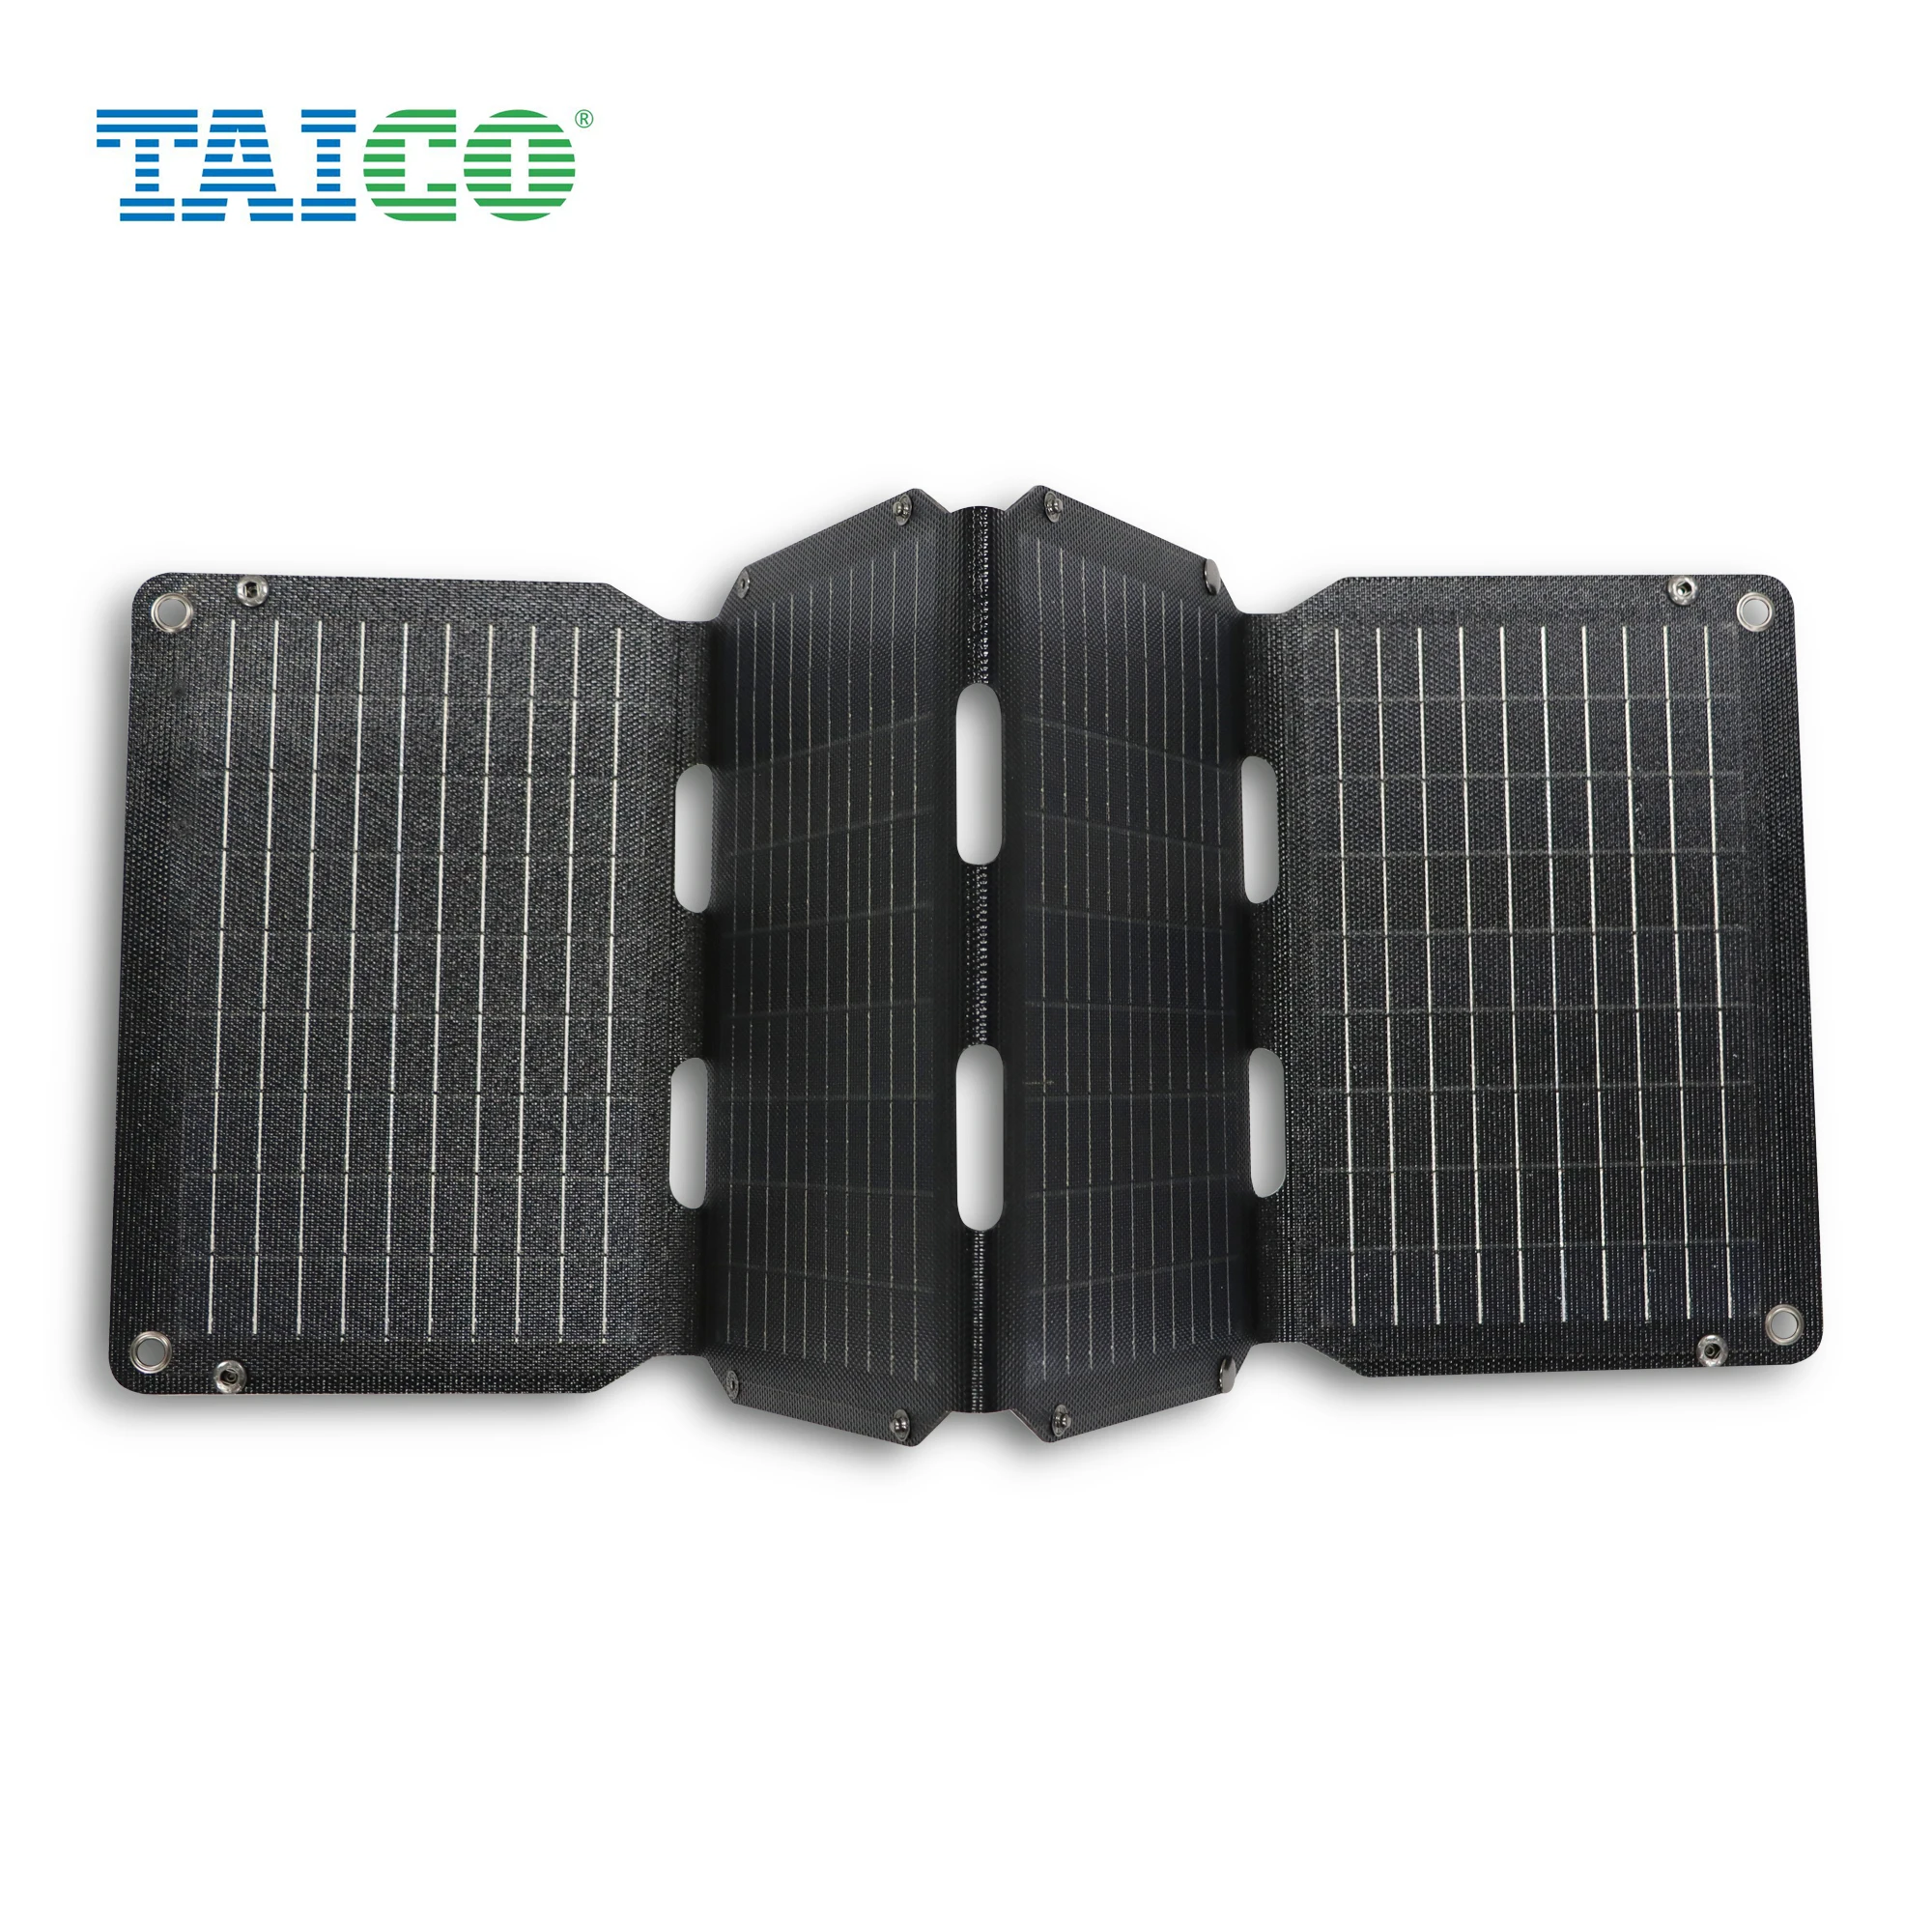 

TAICO Hot Selling Foldable Solar For Outdoor Energy Saving Lighting 40w Folding Soar Panels